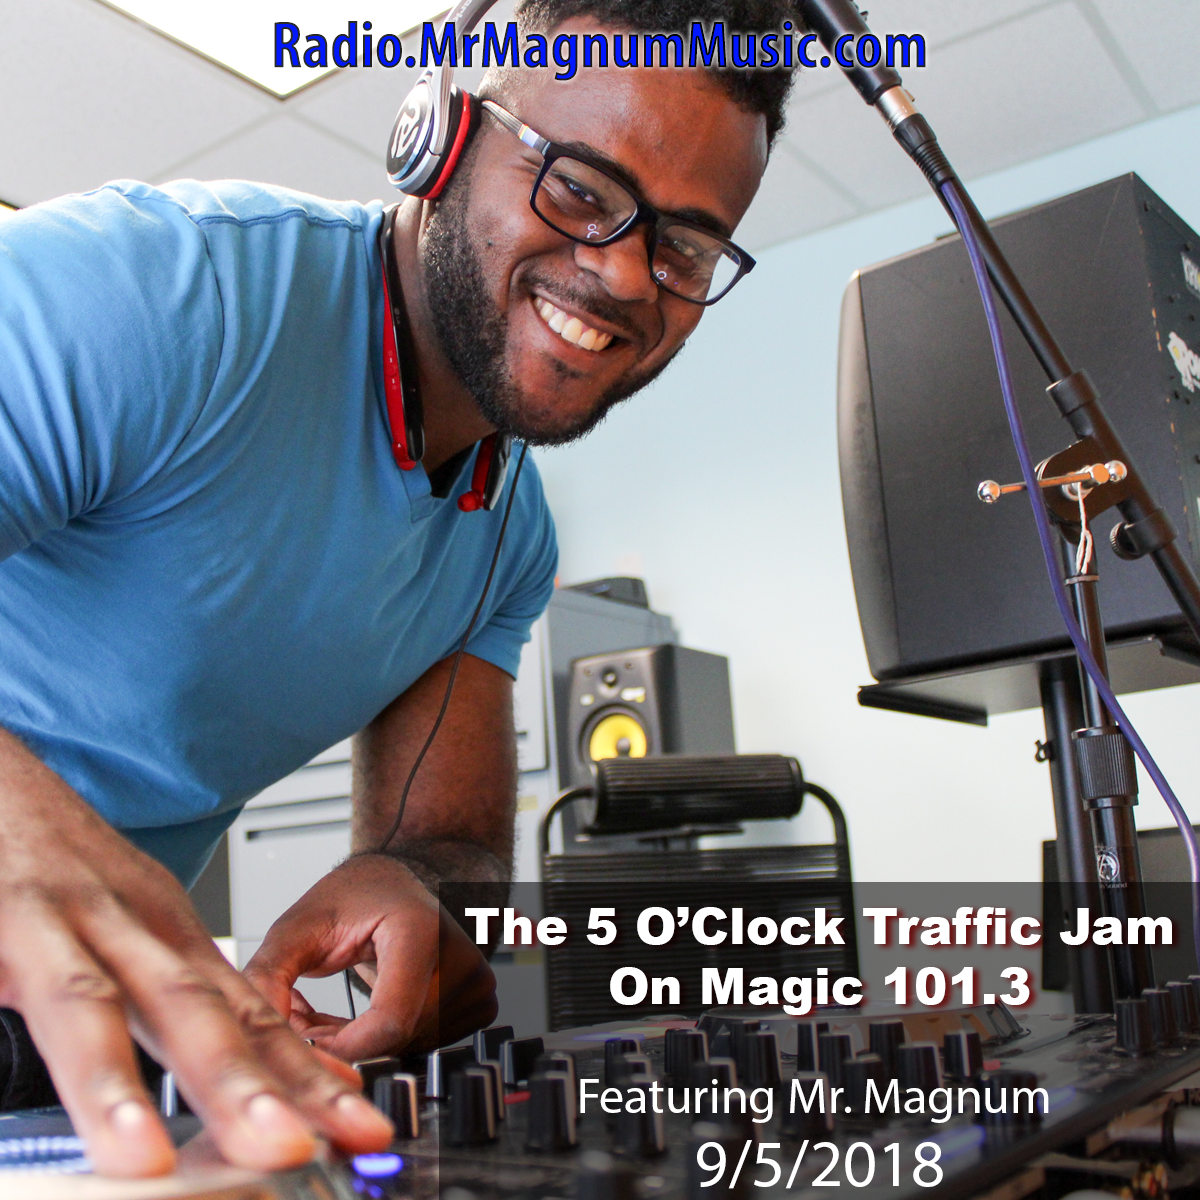 The 5 O'Clock Traffic Jam 20180905 featuring Gainesville's #1 DJ, Mr. Magnum on Magic 101.3